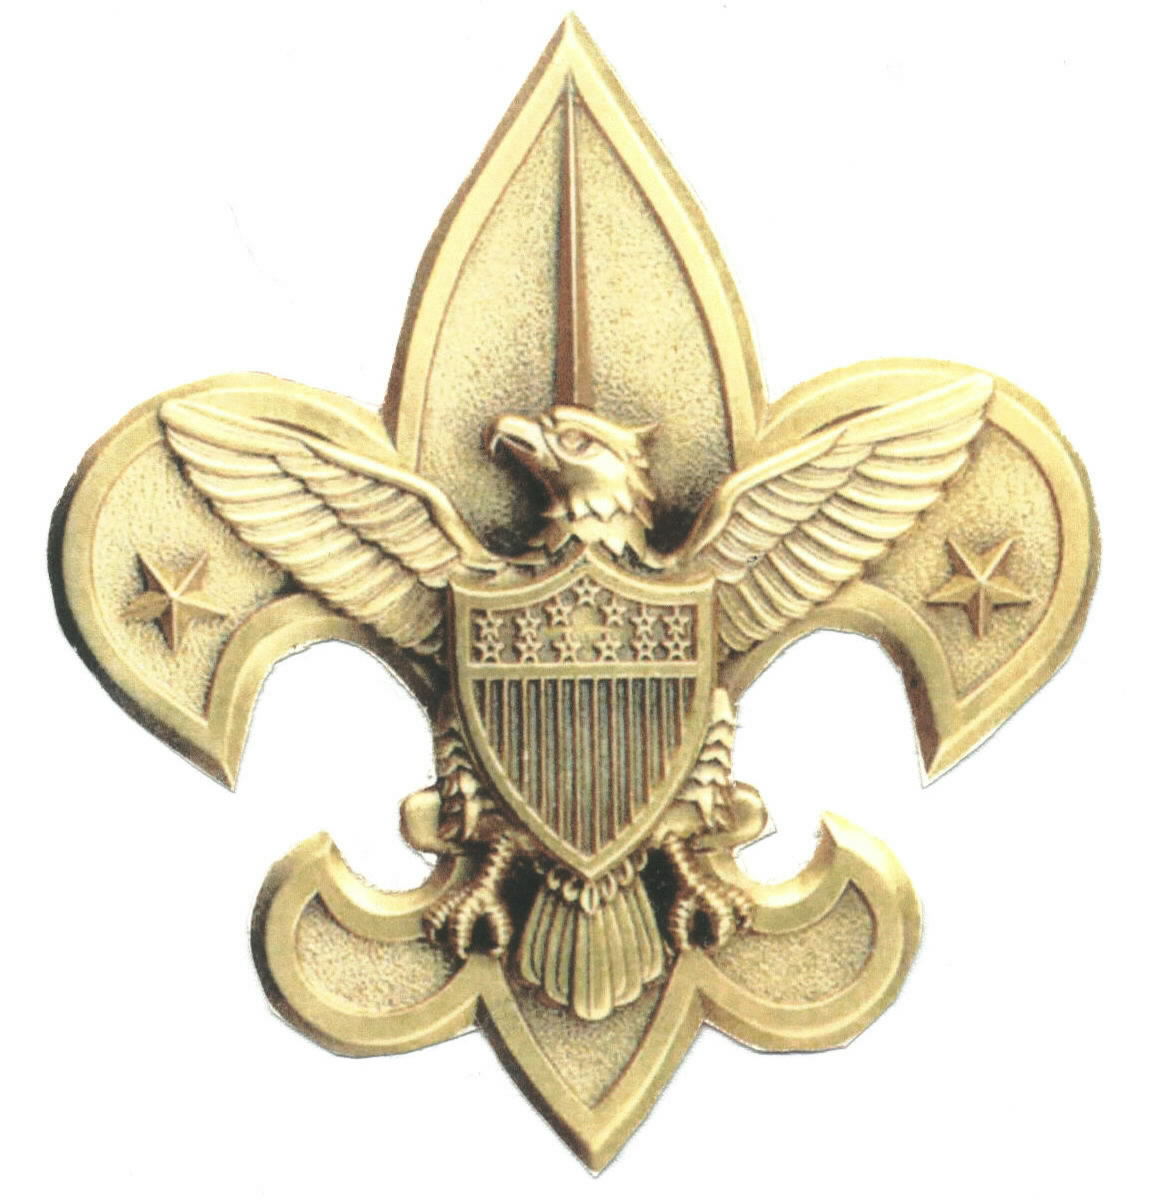 Boy Scouts of America website link